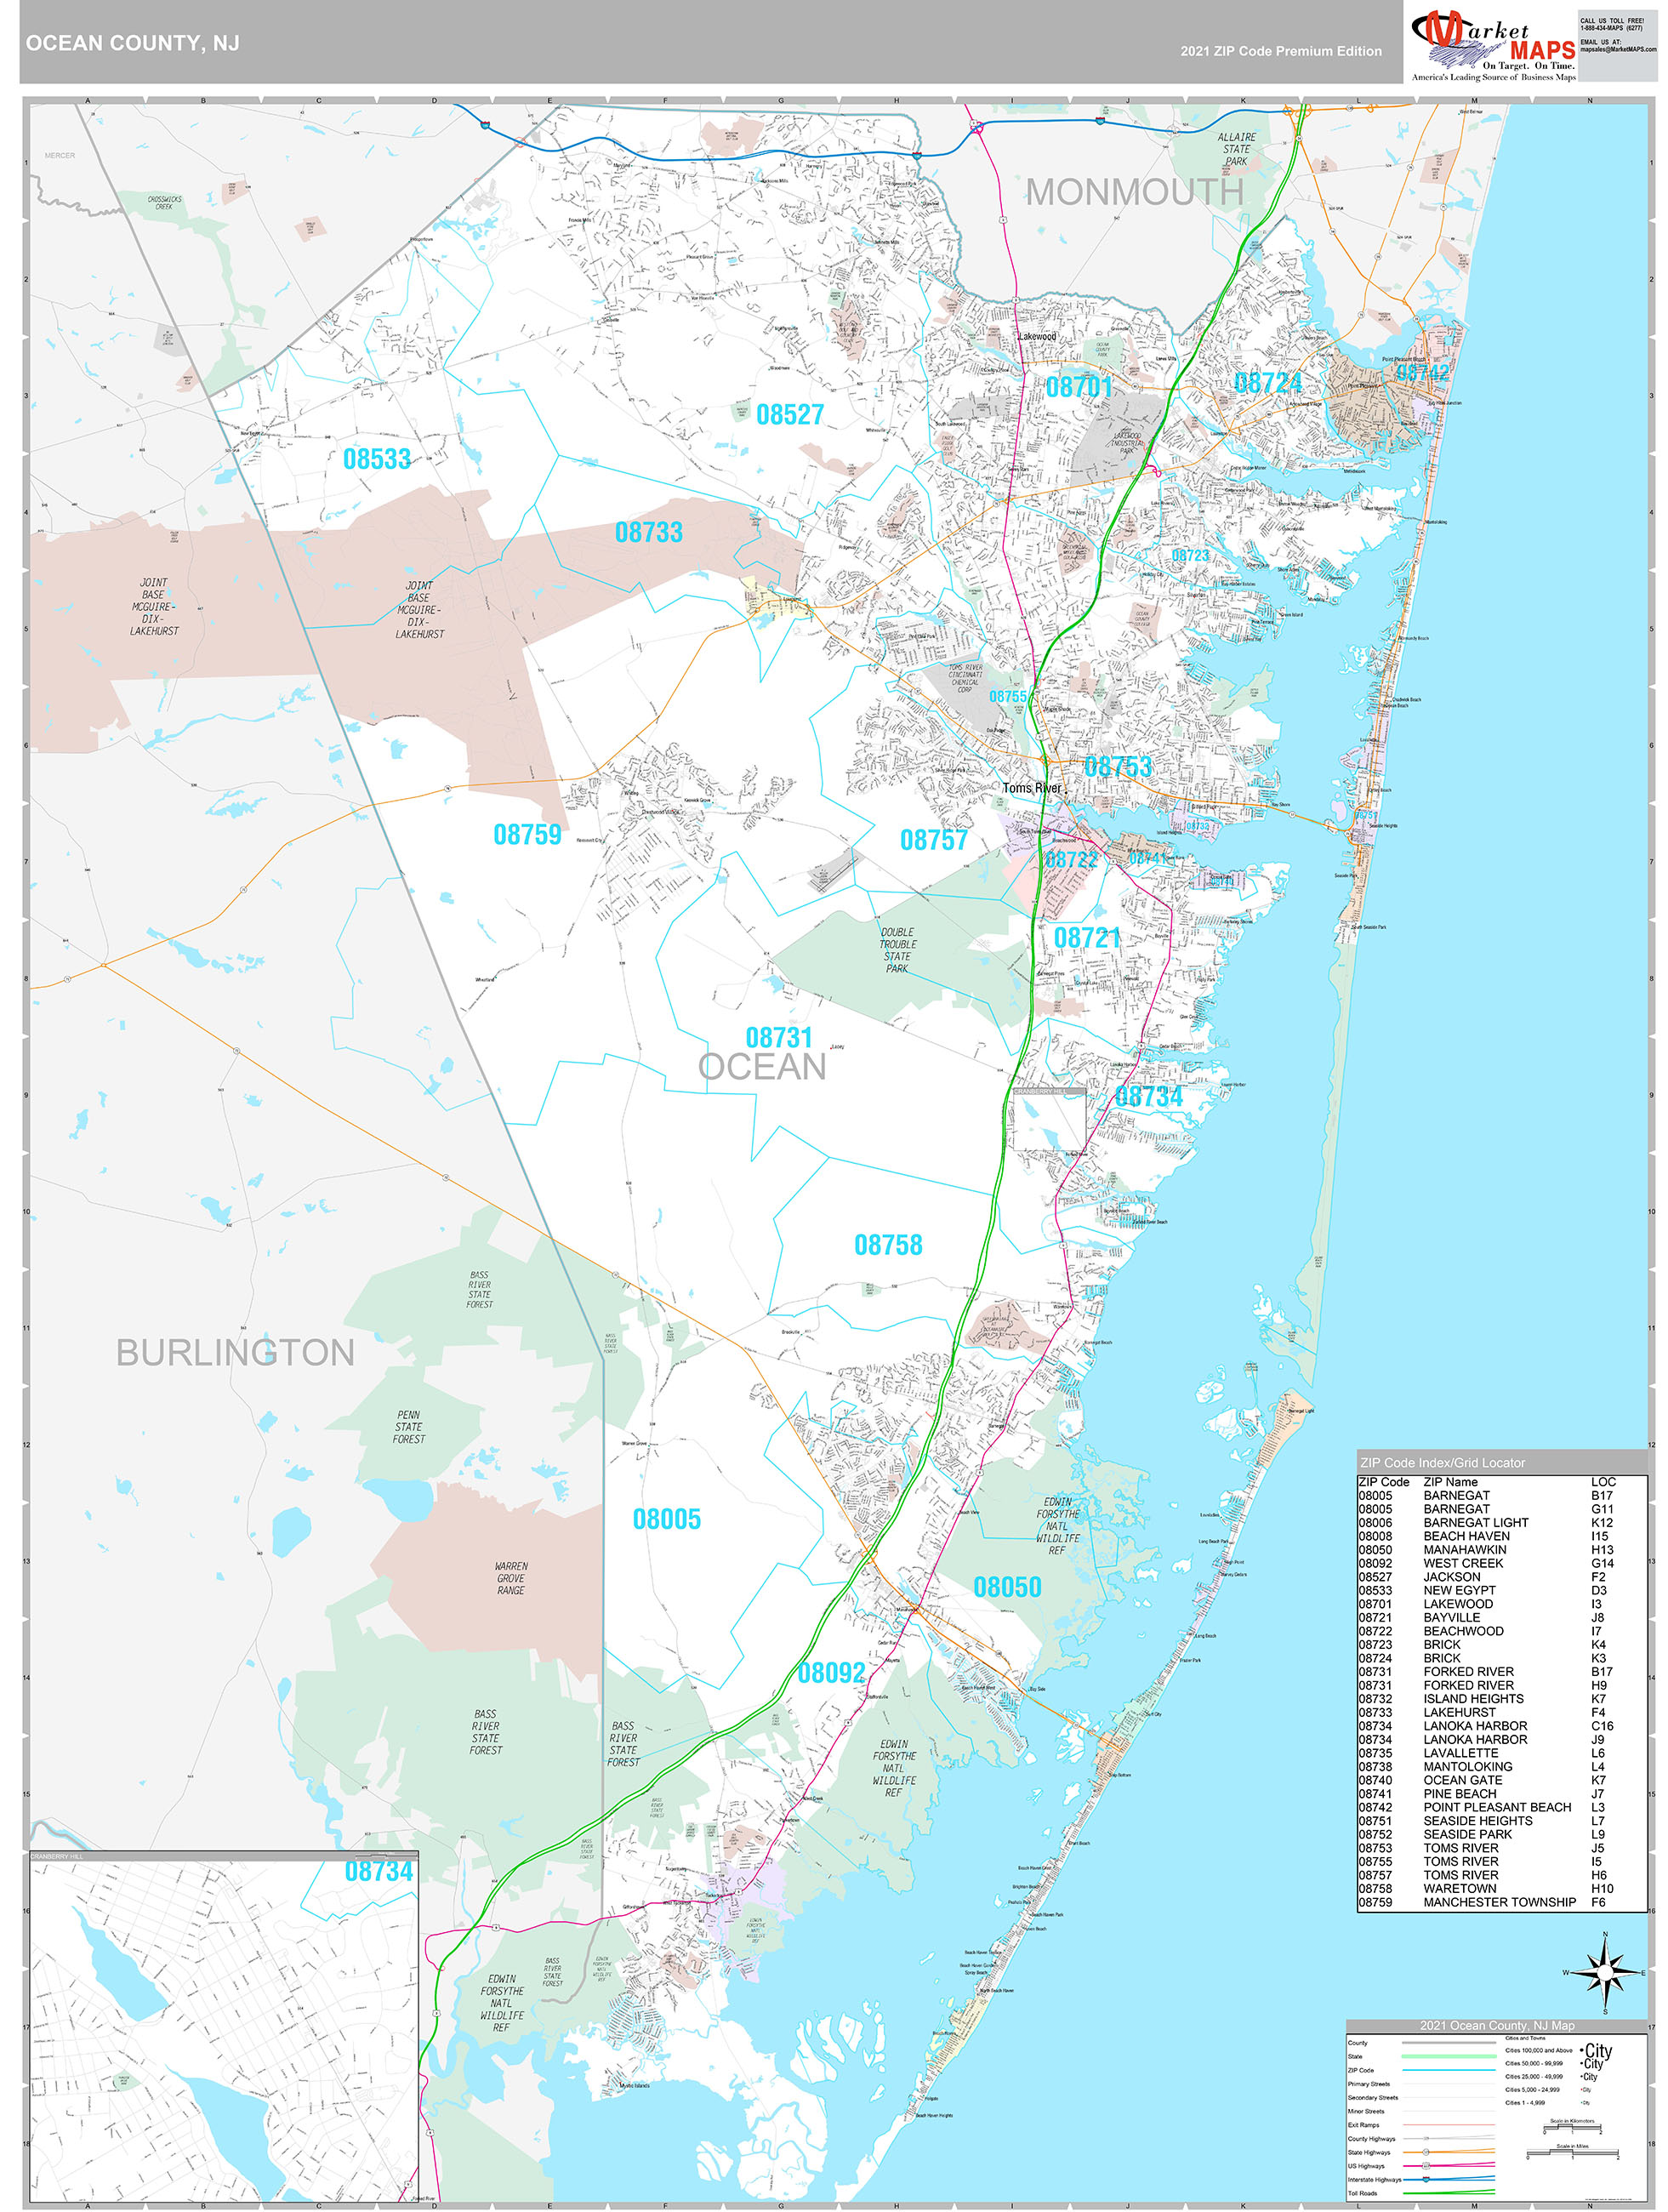 Ocean County, NJ Wall Map Premium Style by MarketMAPS